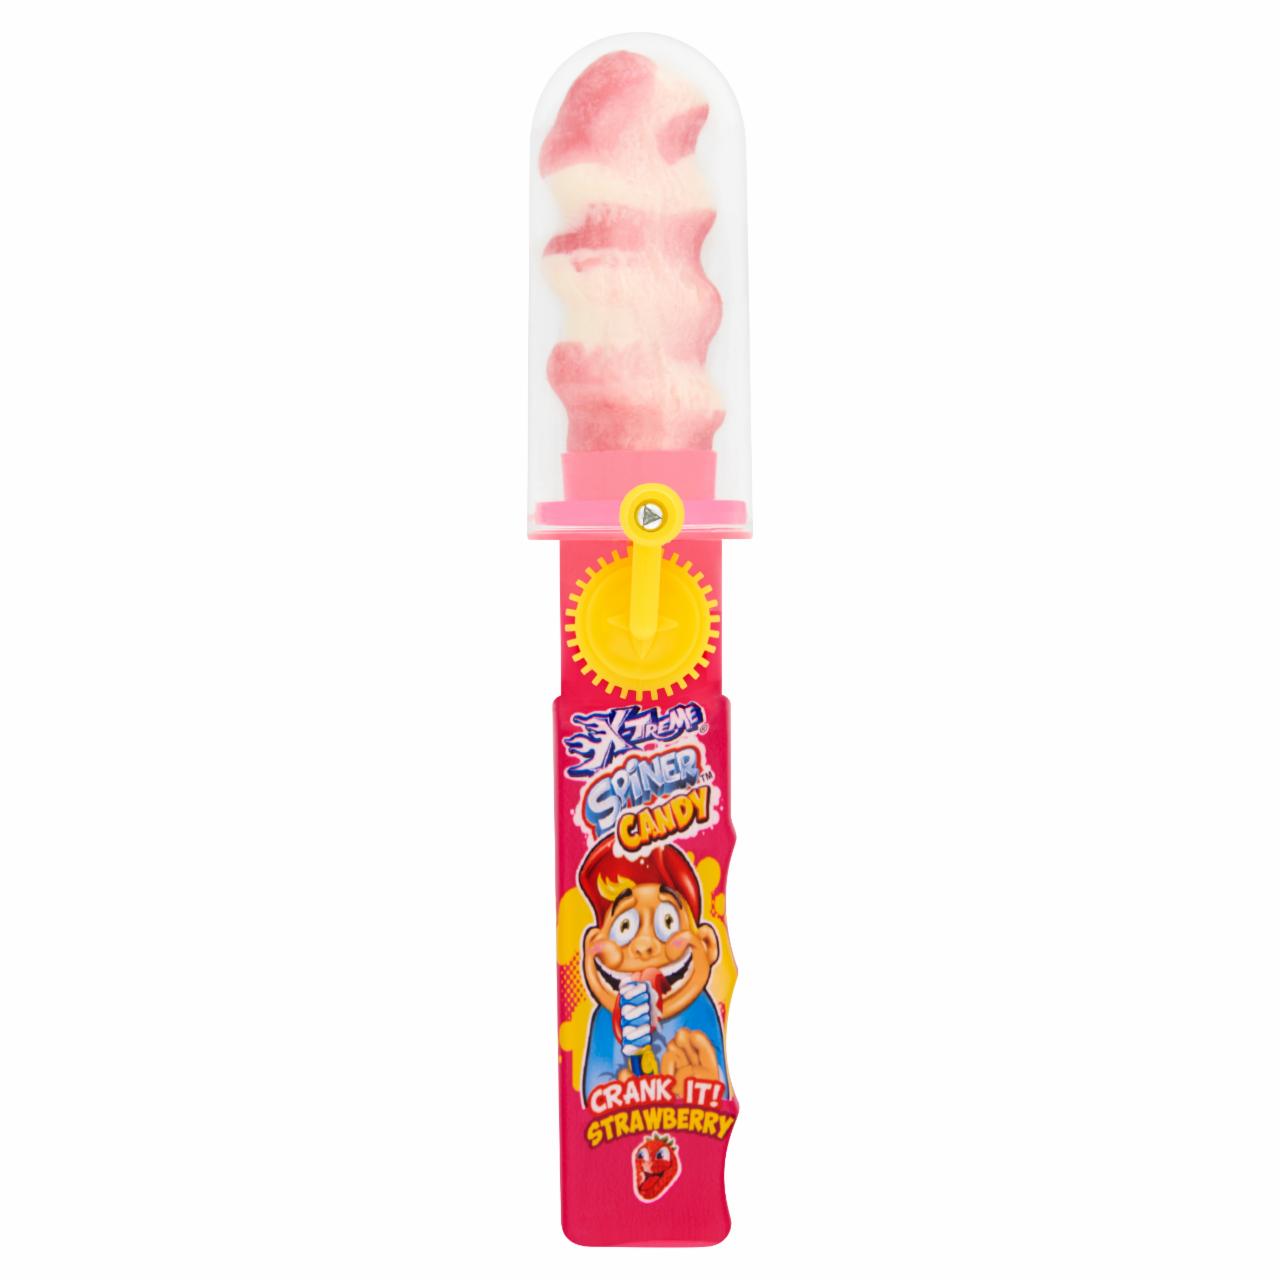 Képek - X-Treme Spiner Candy nyalóka 23 g